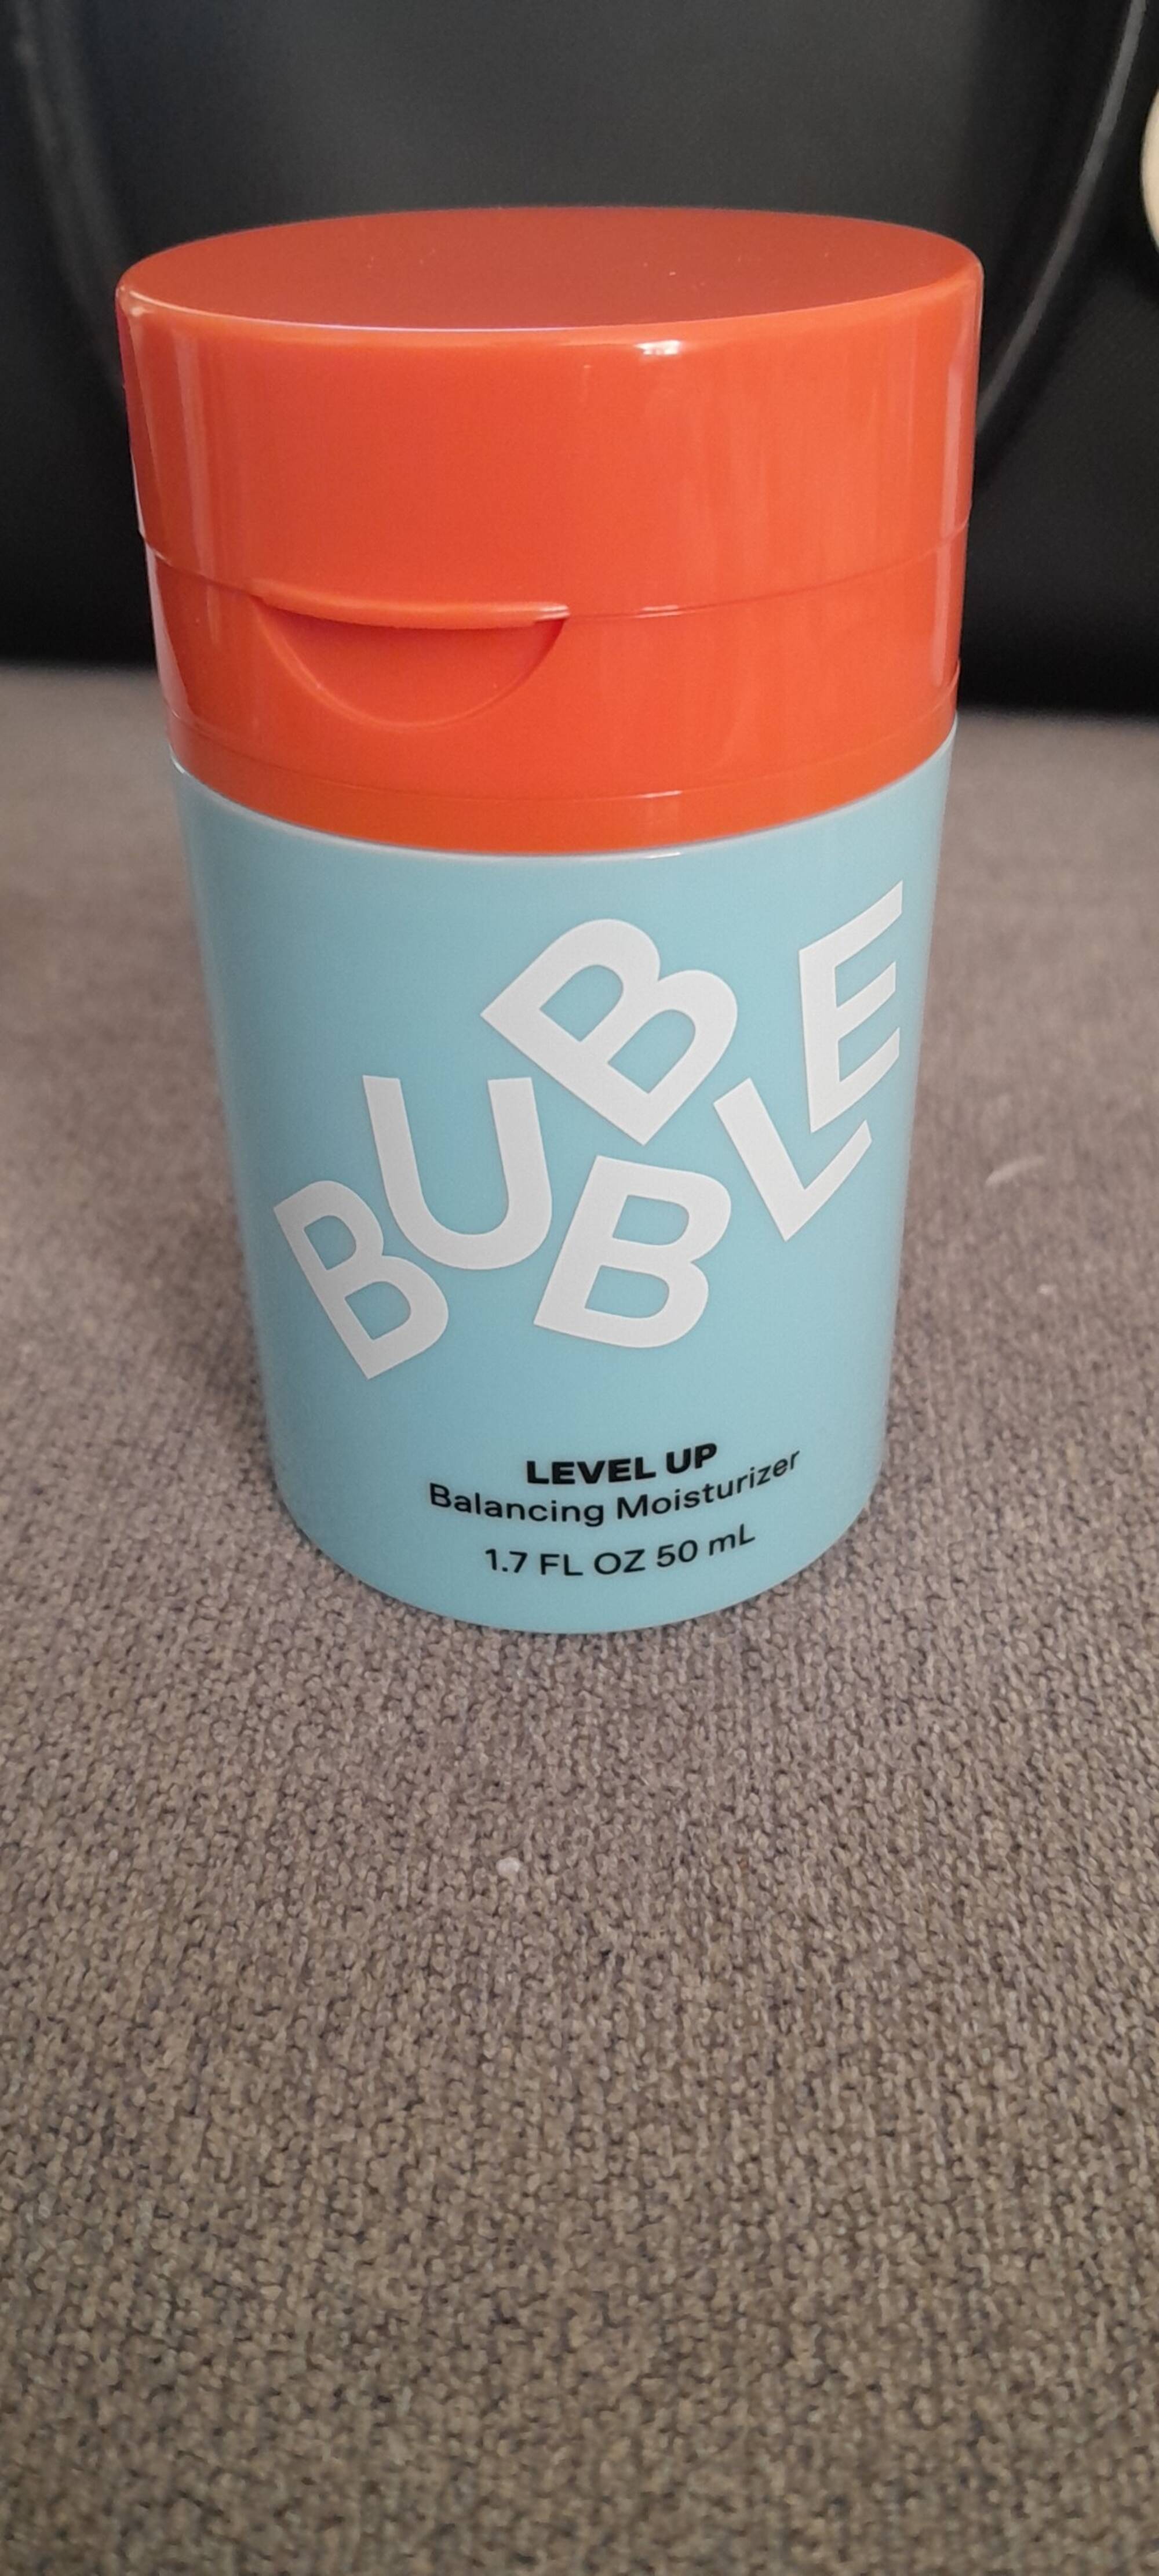 BUBBLE - Level up - Balancing moisturiser